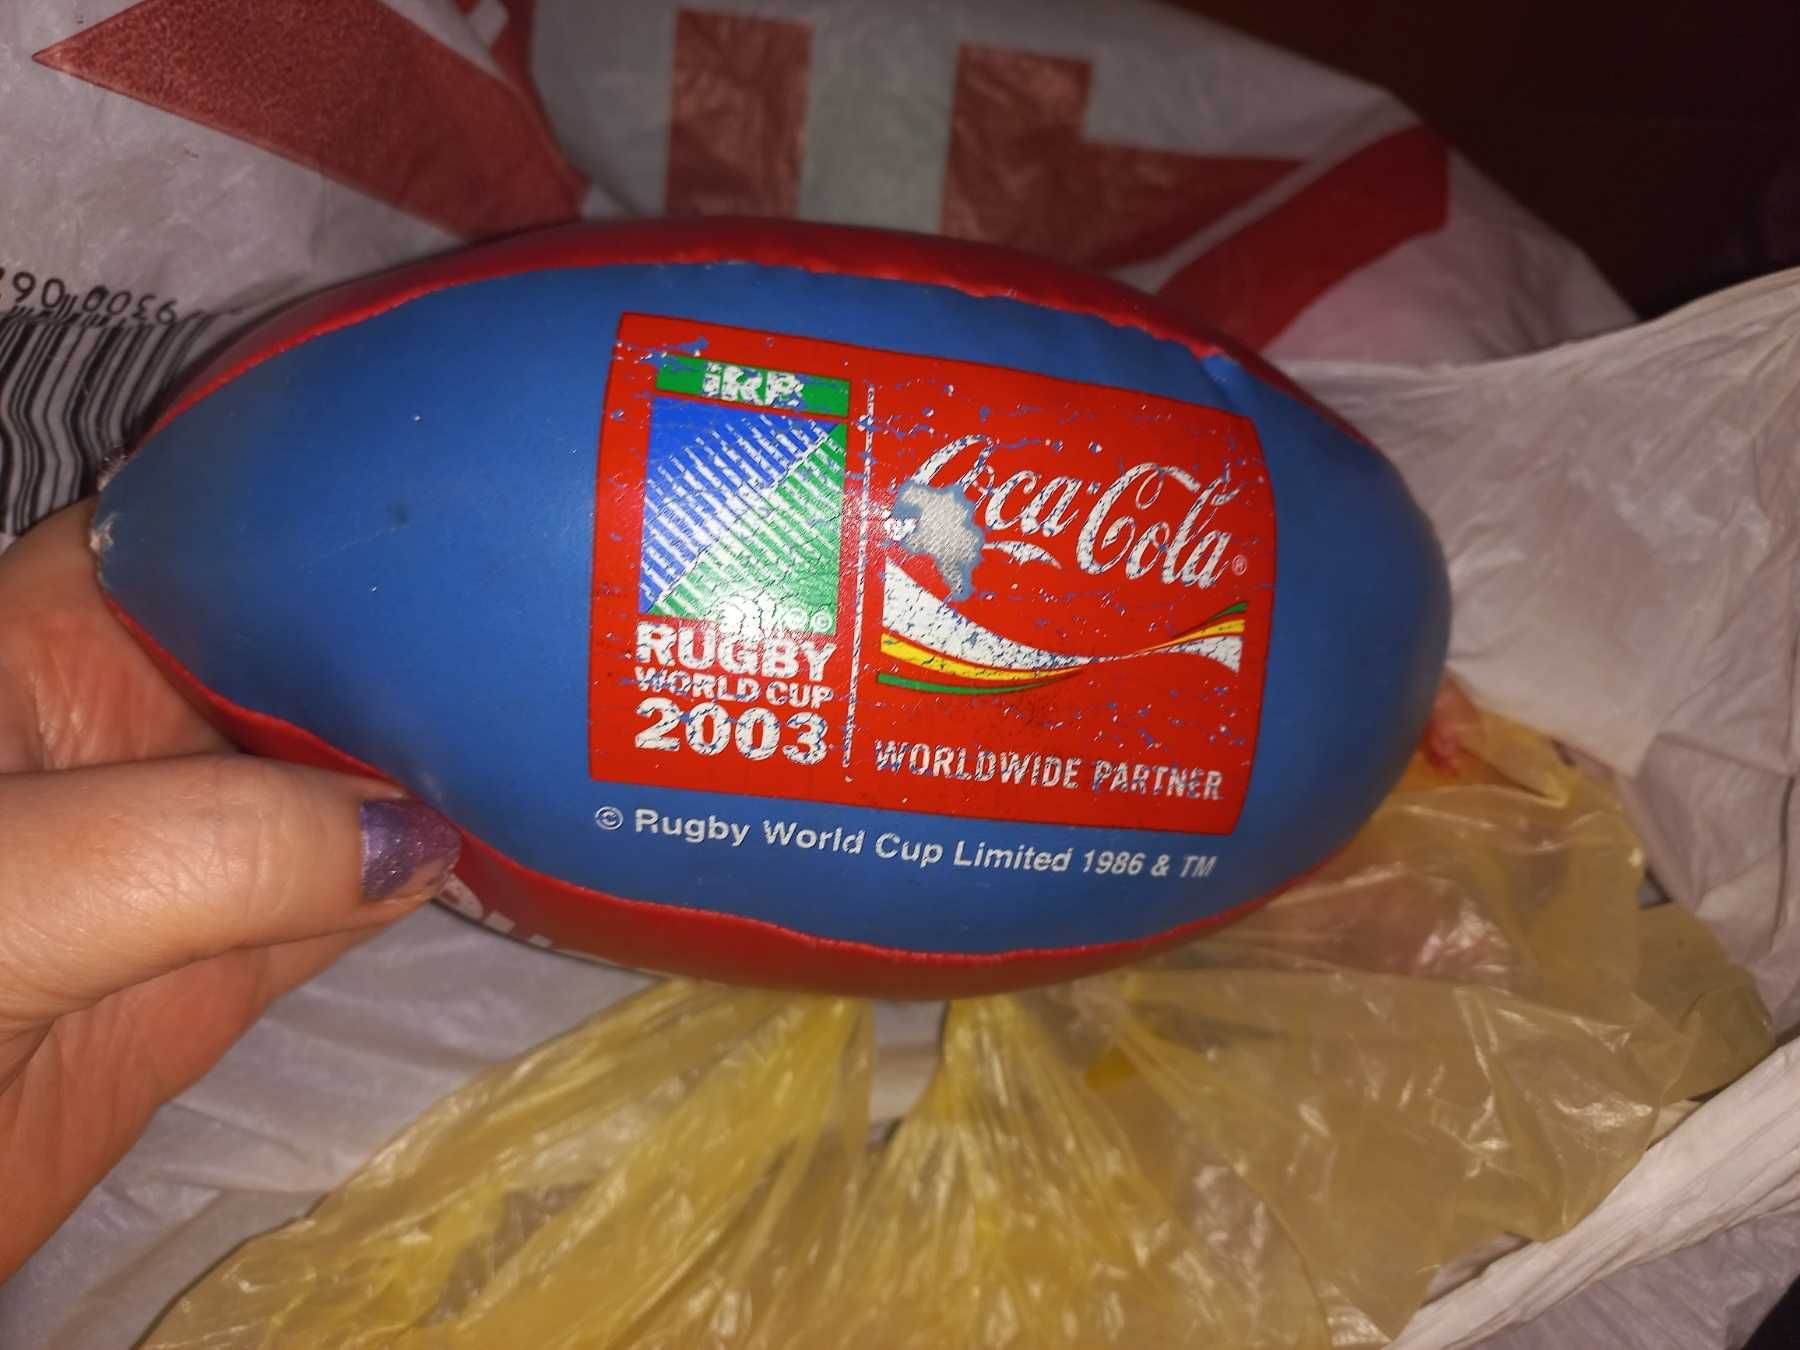 спорт коллекция мяч регби мягконабивной rugby world cup 2003 coca cola